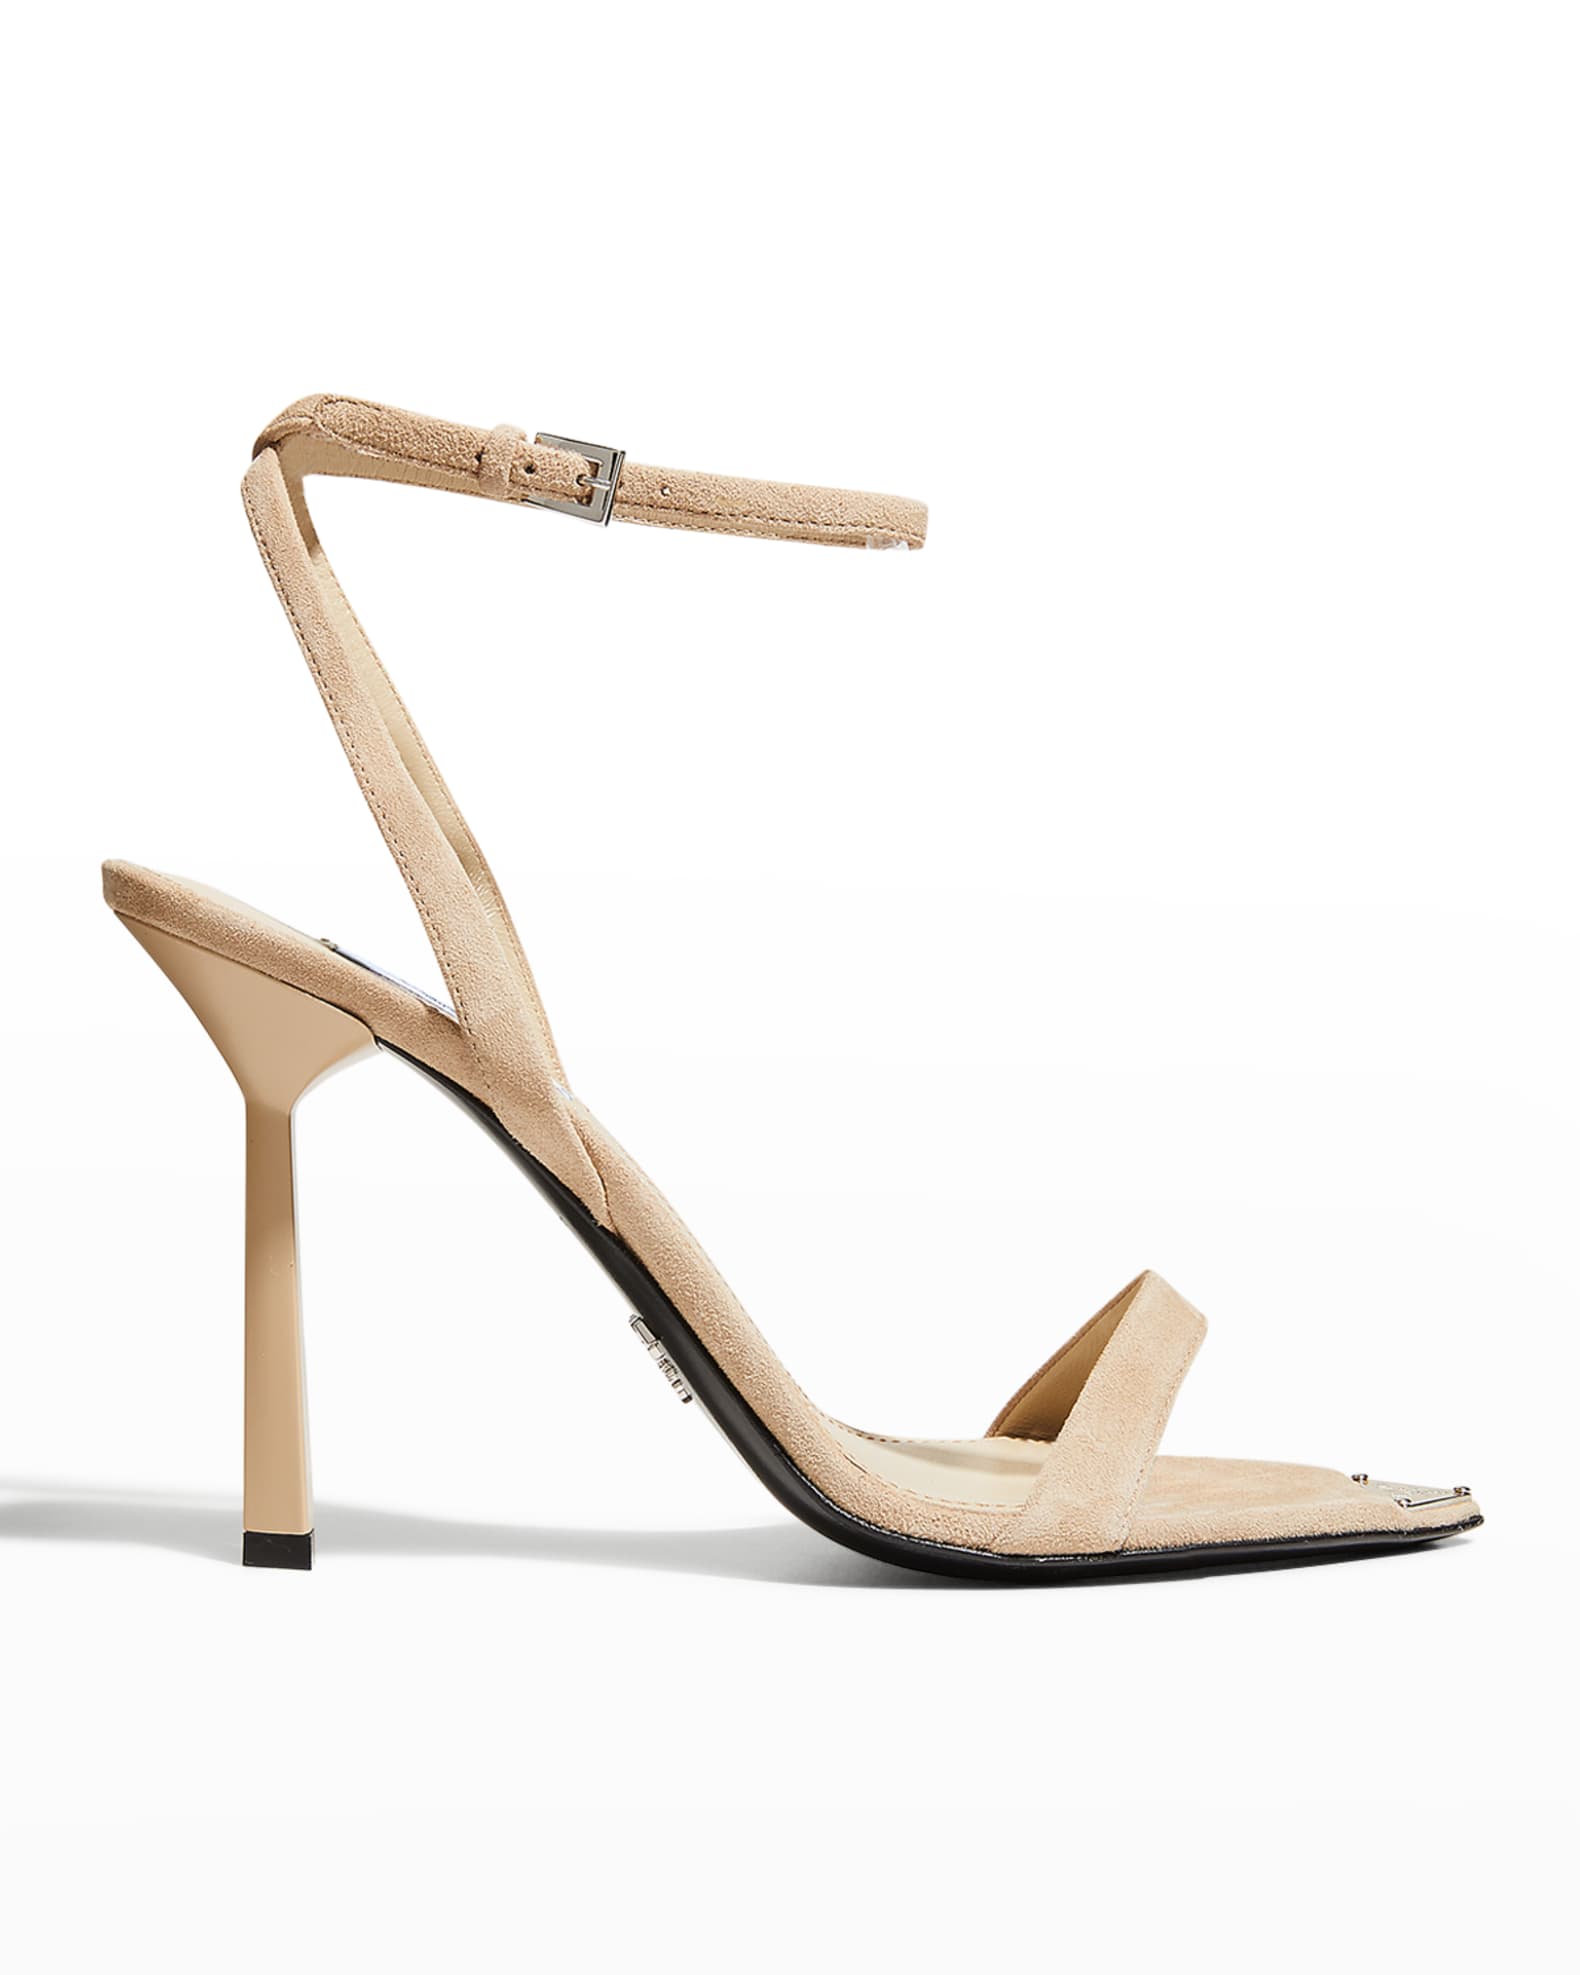 Prada Leather Ankle-Strap Sandals | Neiman Marcus